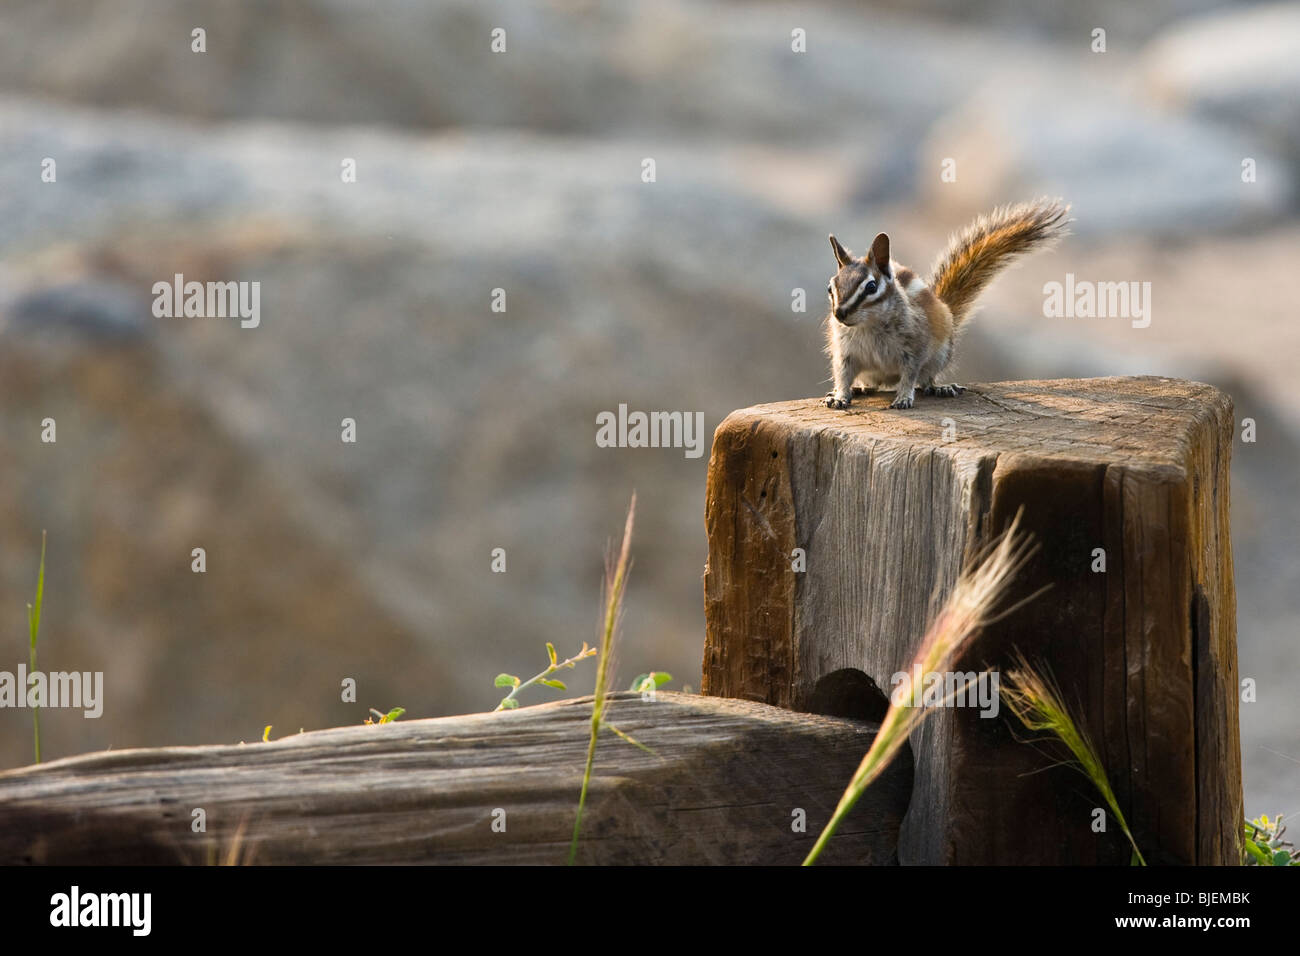 Chipmunk (Tamias striatus) on a wooden fence, Yosemite National park, USA Stock Photo